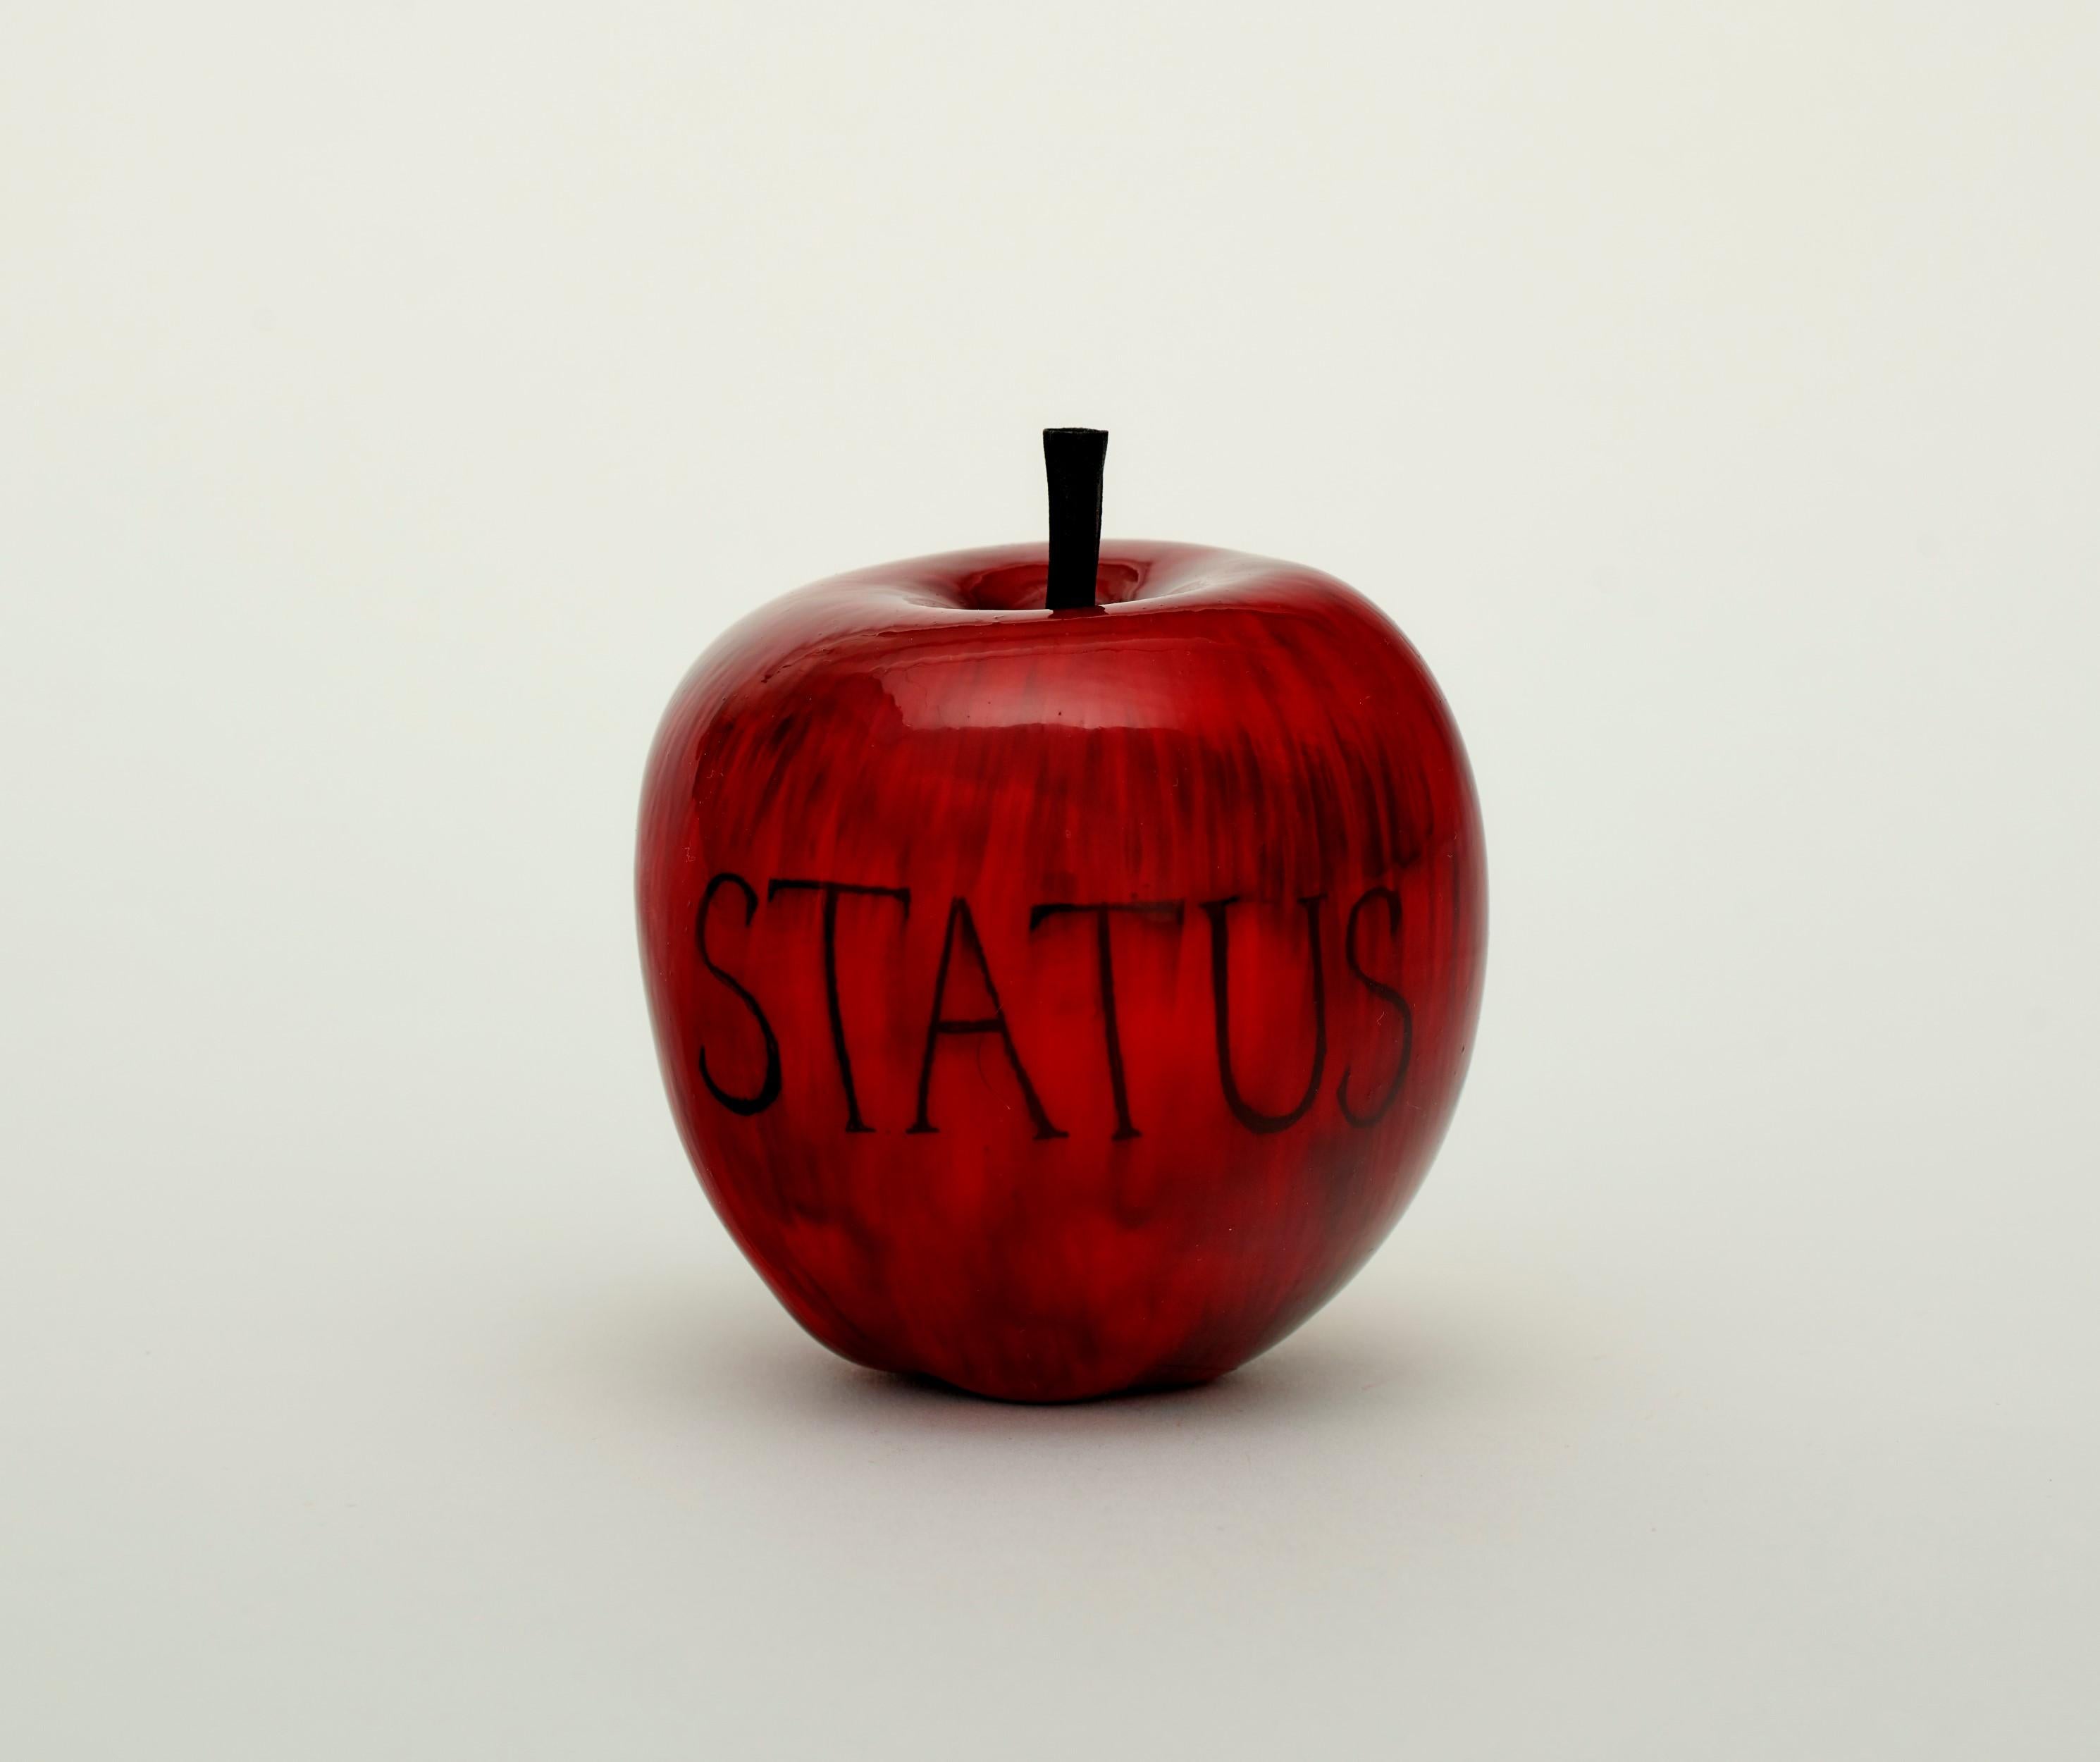 Barnaby Barford Figurative Sculpture - Status (Apple)